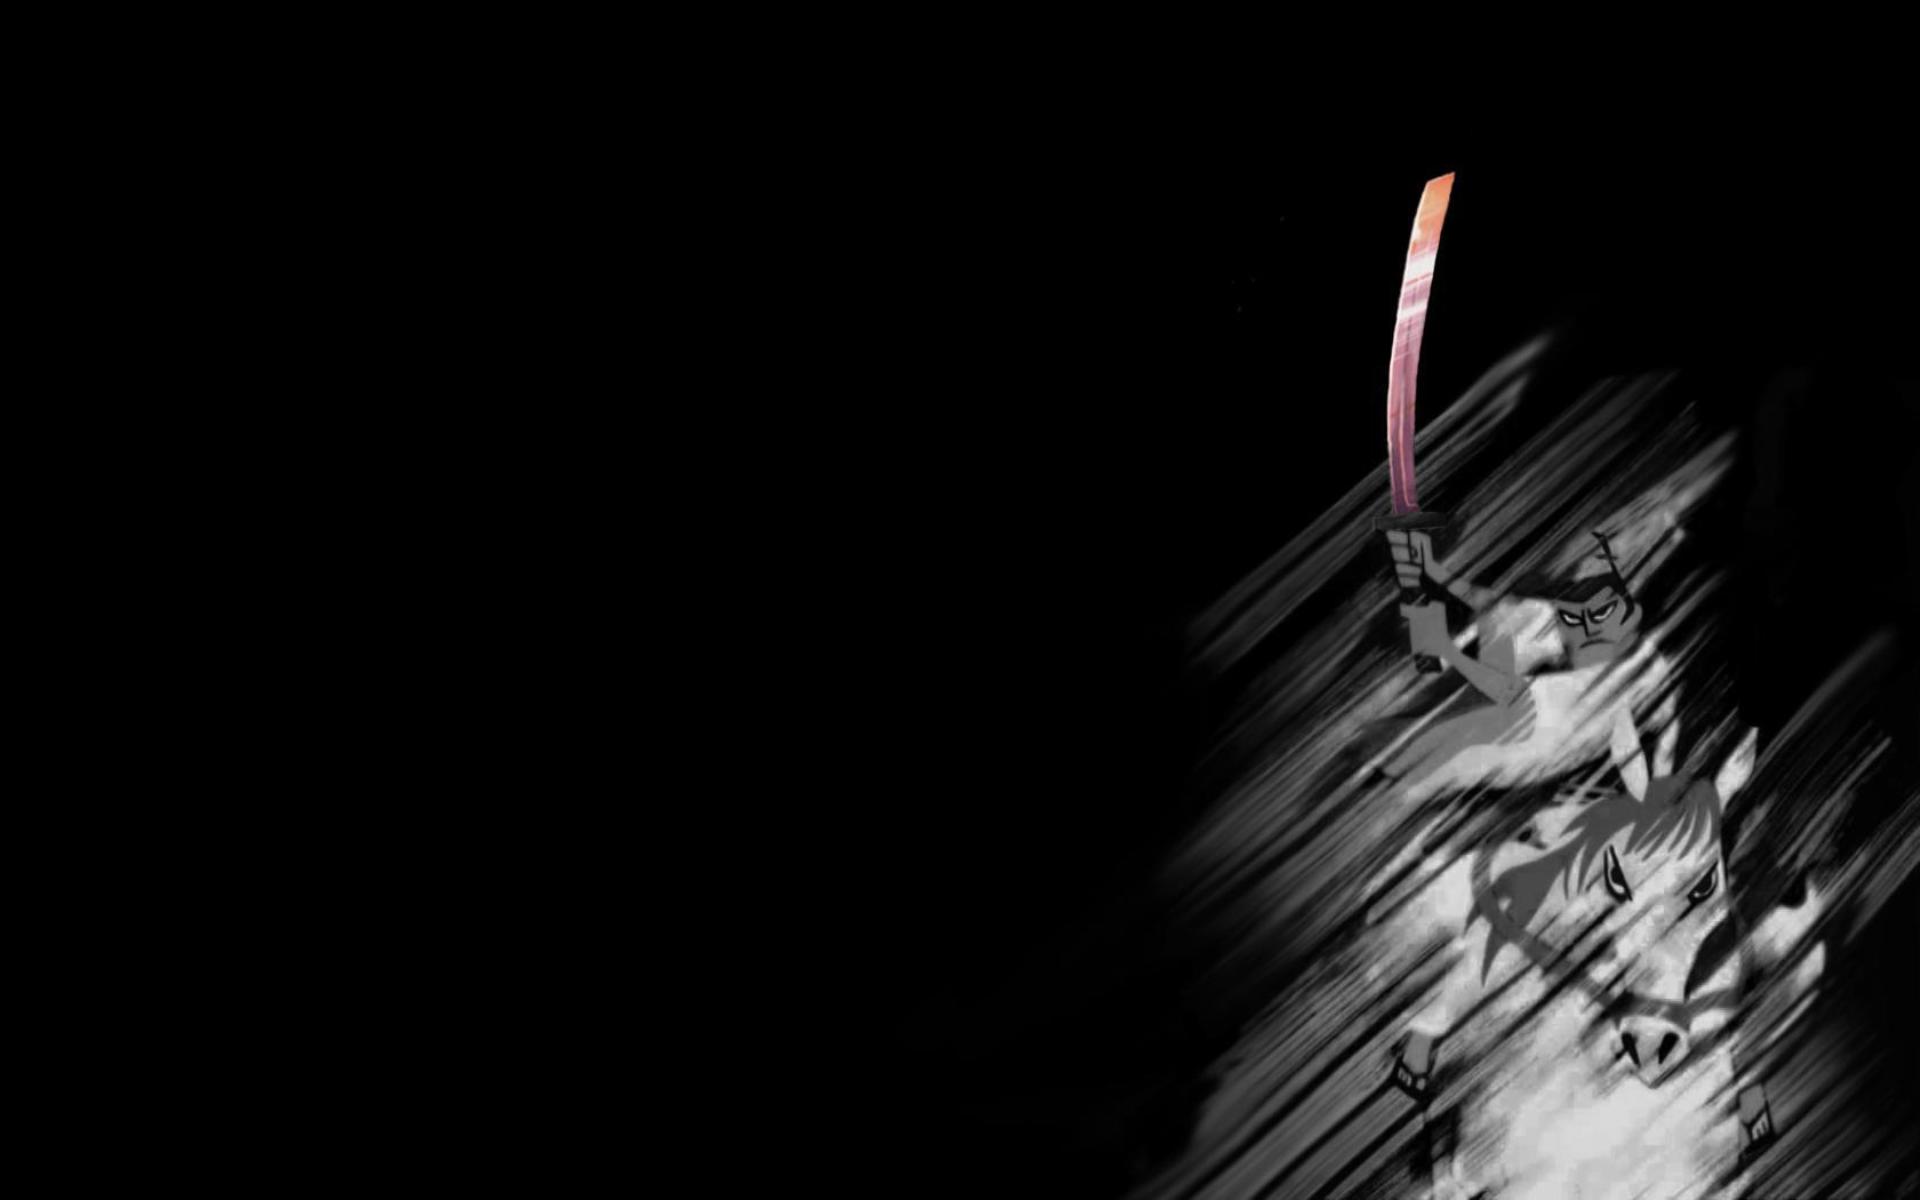 Samurai Jack Wallpaper 1920x1200 px Free Download